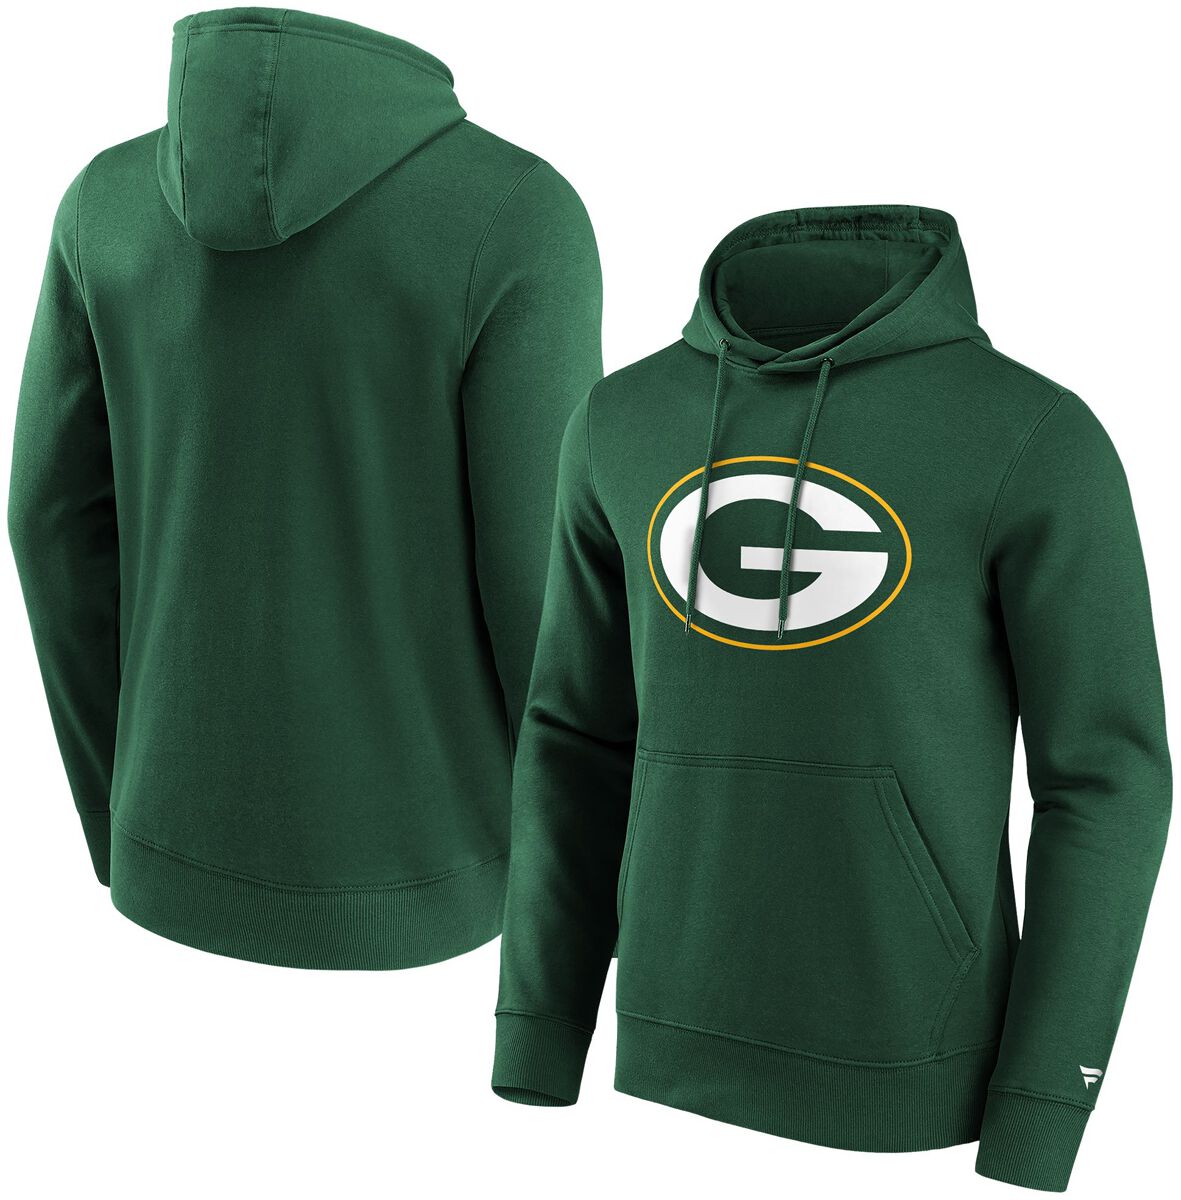 Fanatics Kapuzenpullover - Green Bay Packers Logo - S - für Männer - Größe S - dunkelgrün